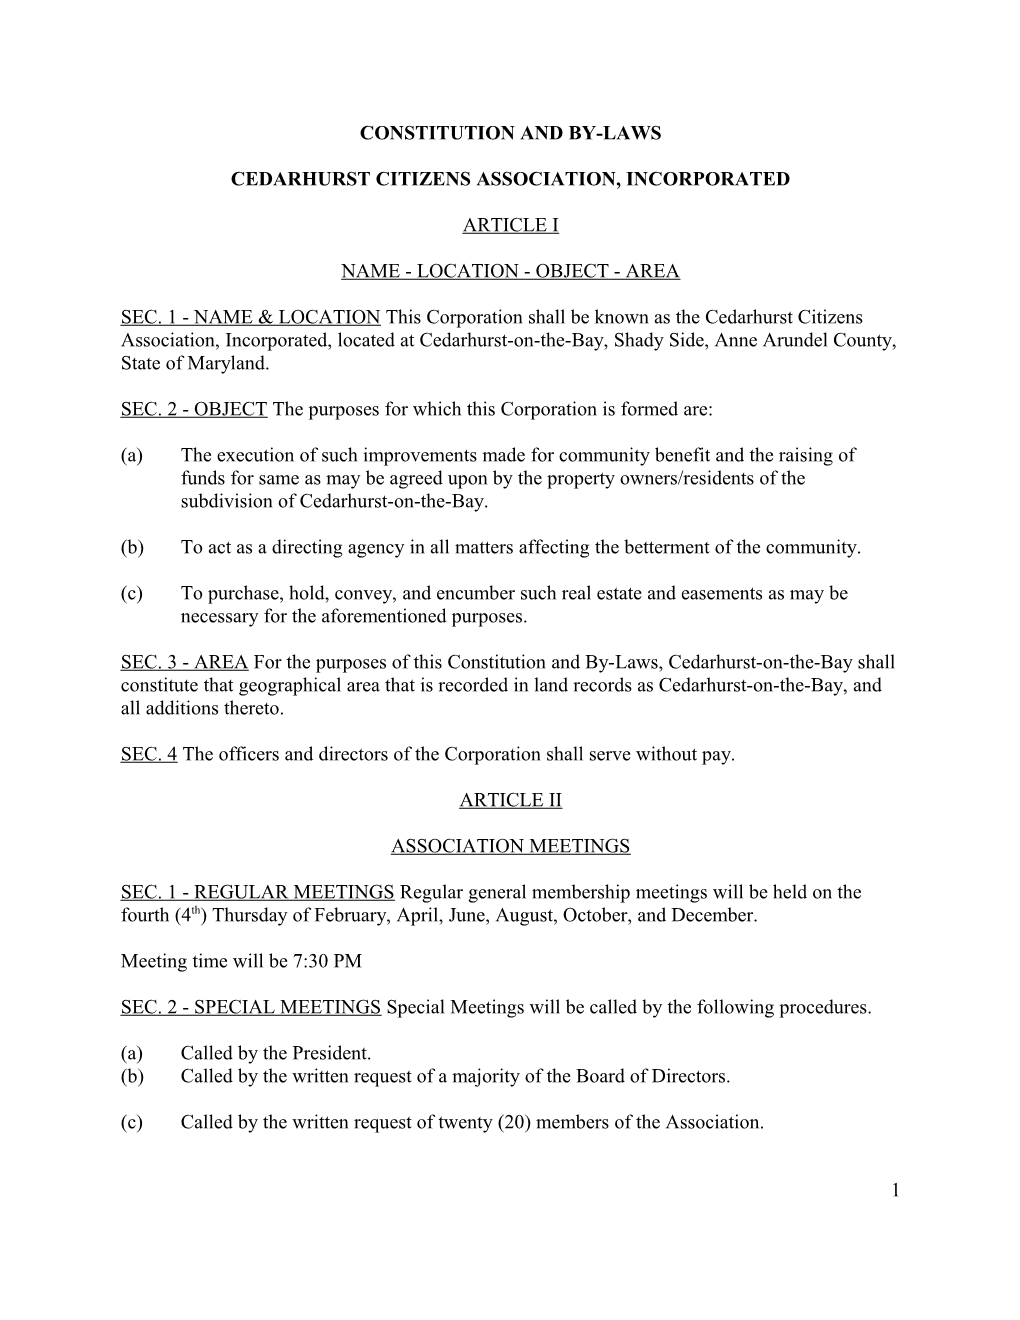 Cedarhurst Citizens Association, Incorporated